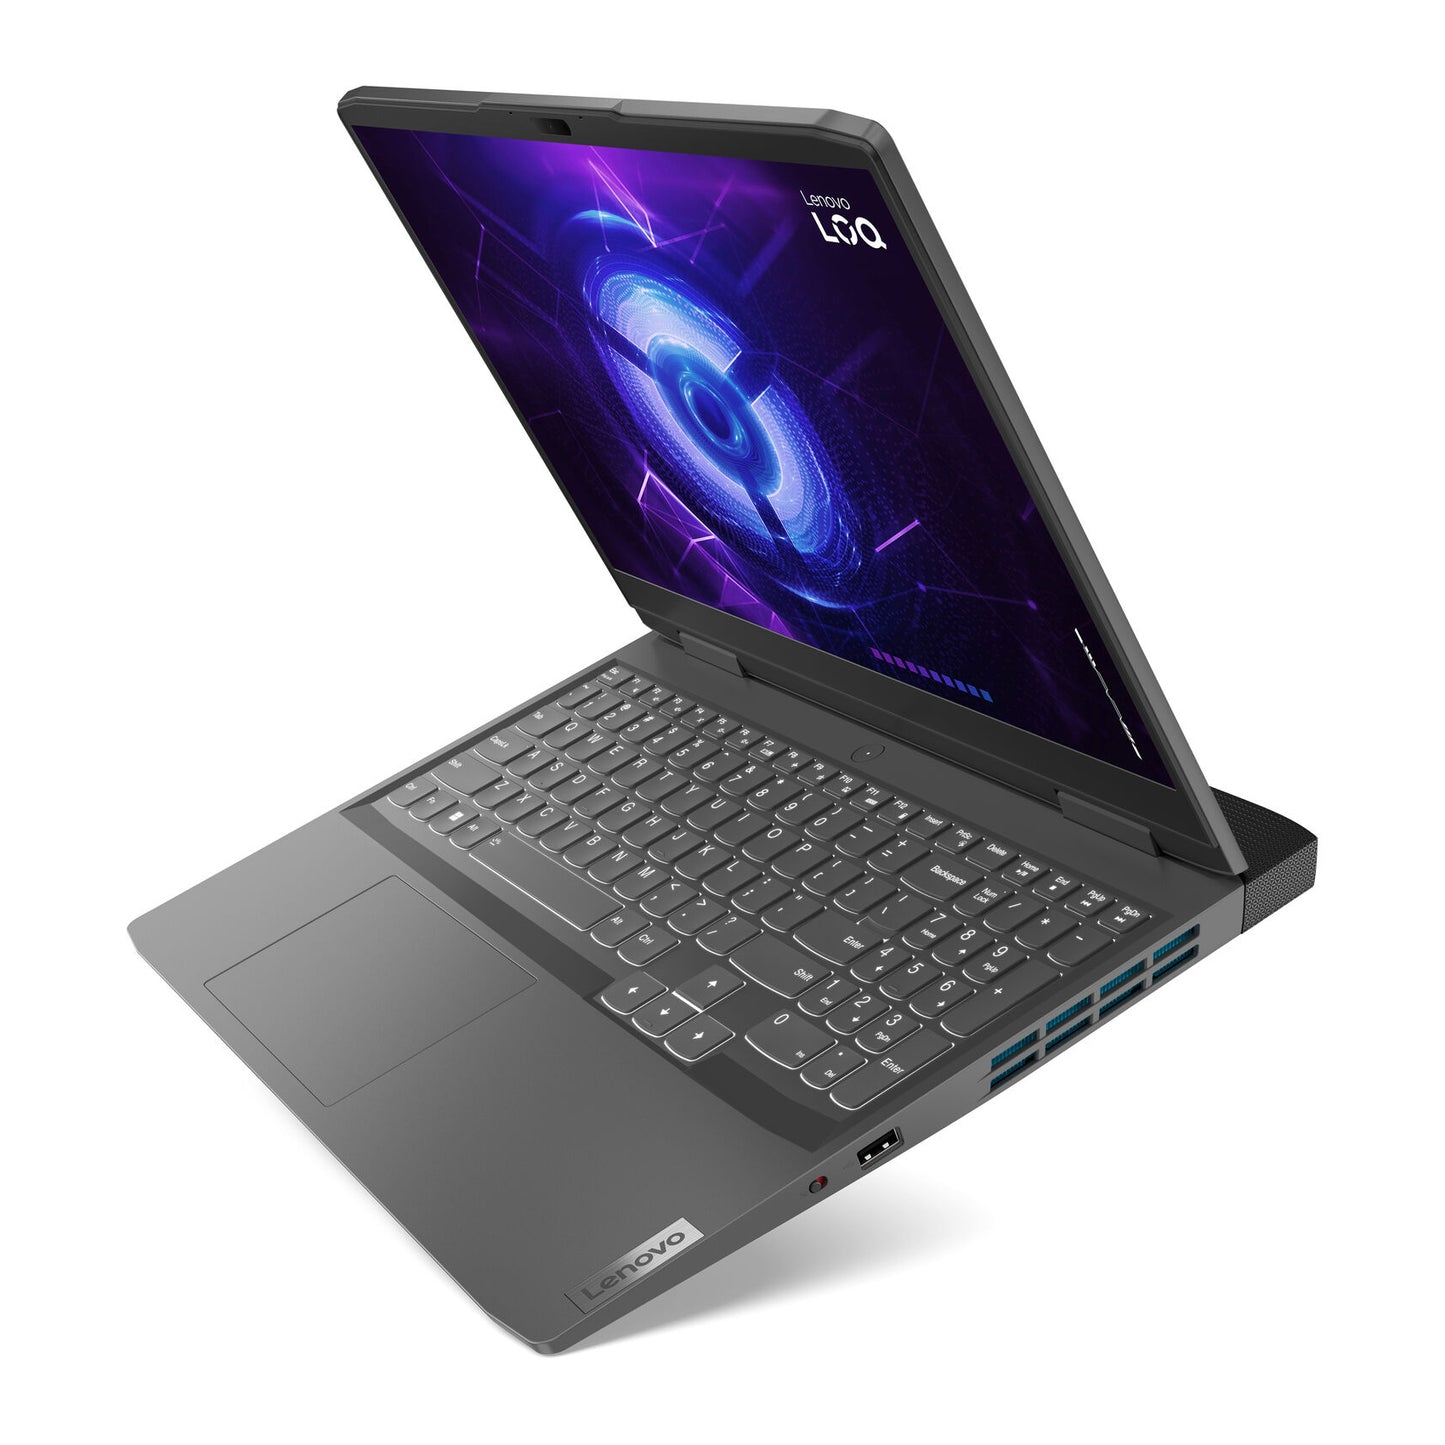 Lenovo LOQ 82XT001NUS Ryzen 7 7840hs Rtx 4050 144hz Gaming Laptops (Brand New)